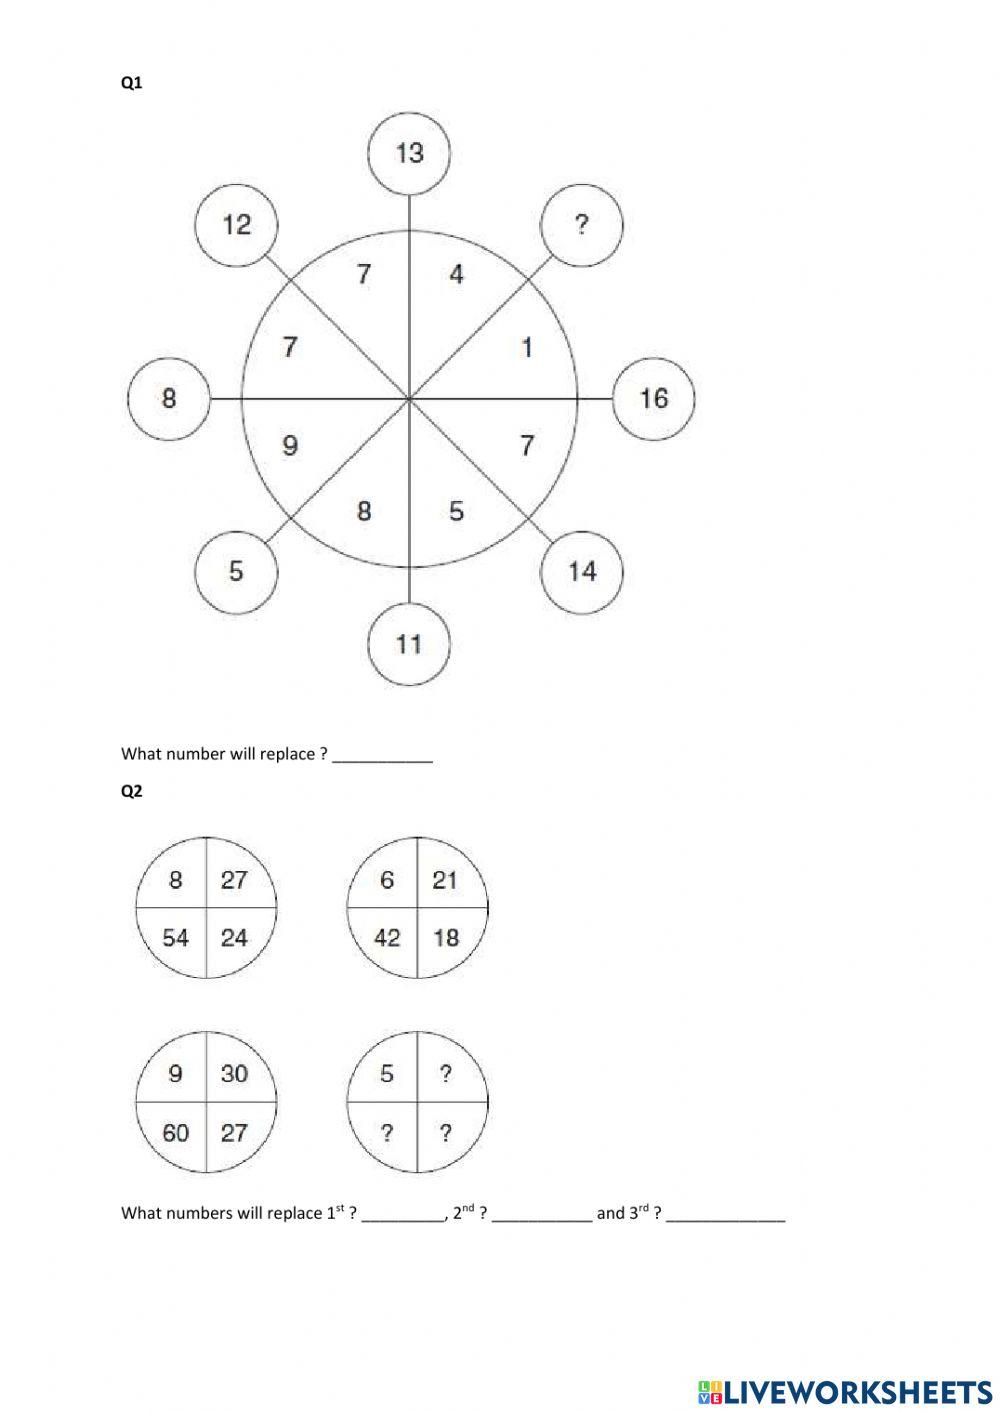 Maths Puzzles -1 - 25Jan23